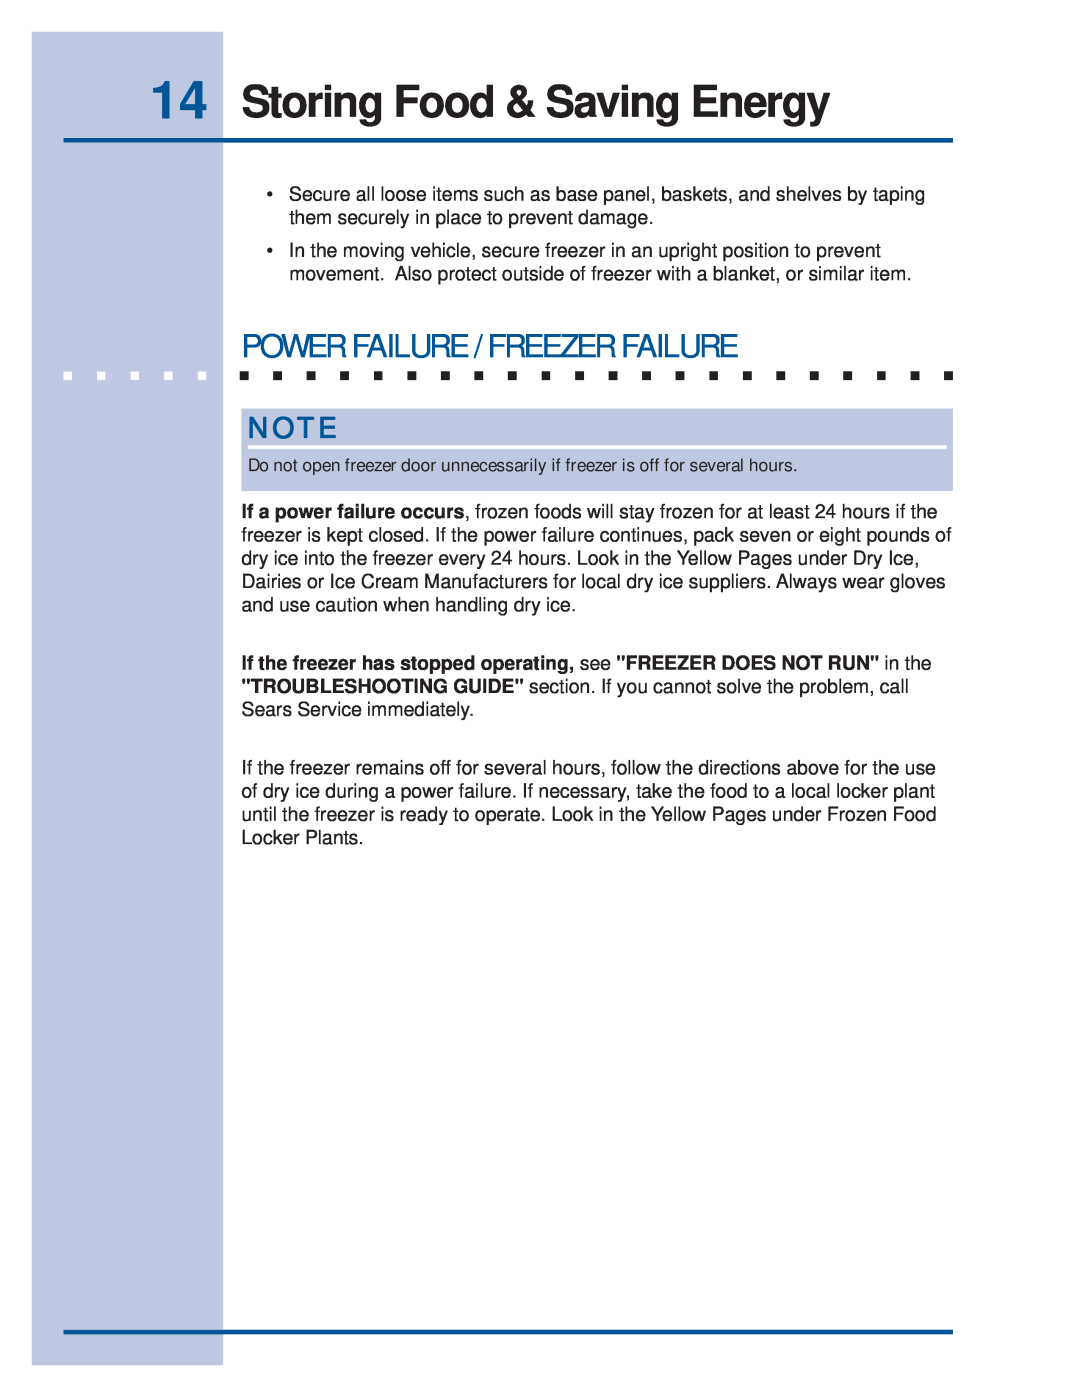 Electrolux 297122900 (0608) manual Storing Food & Saving Energy, Power Failure / Freezer Failure 